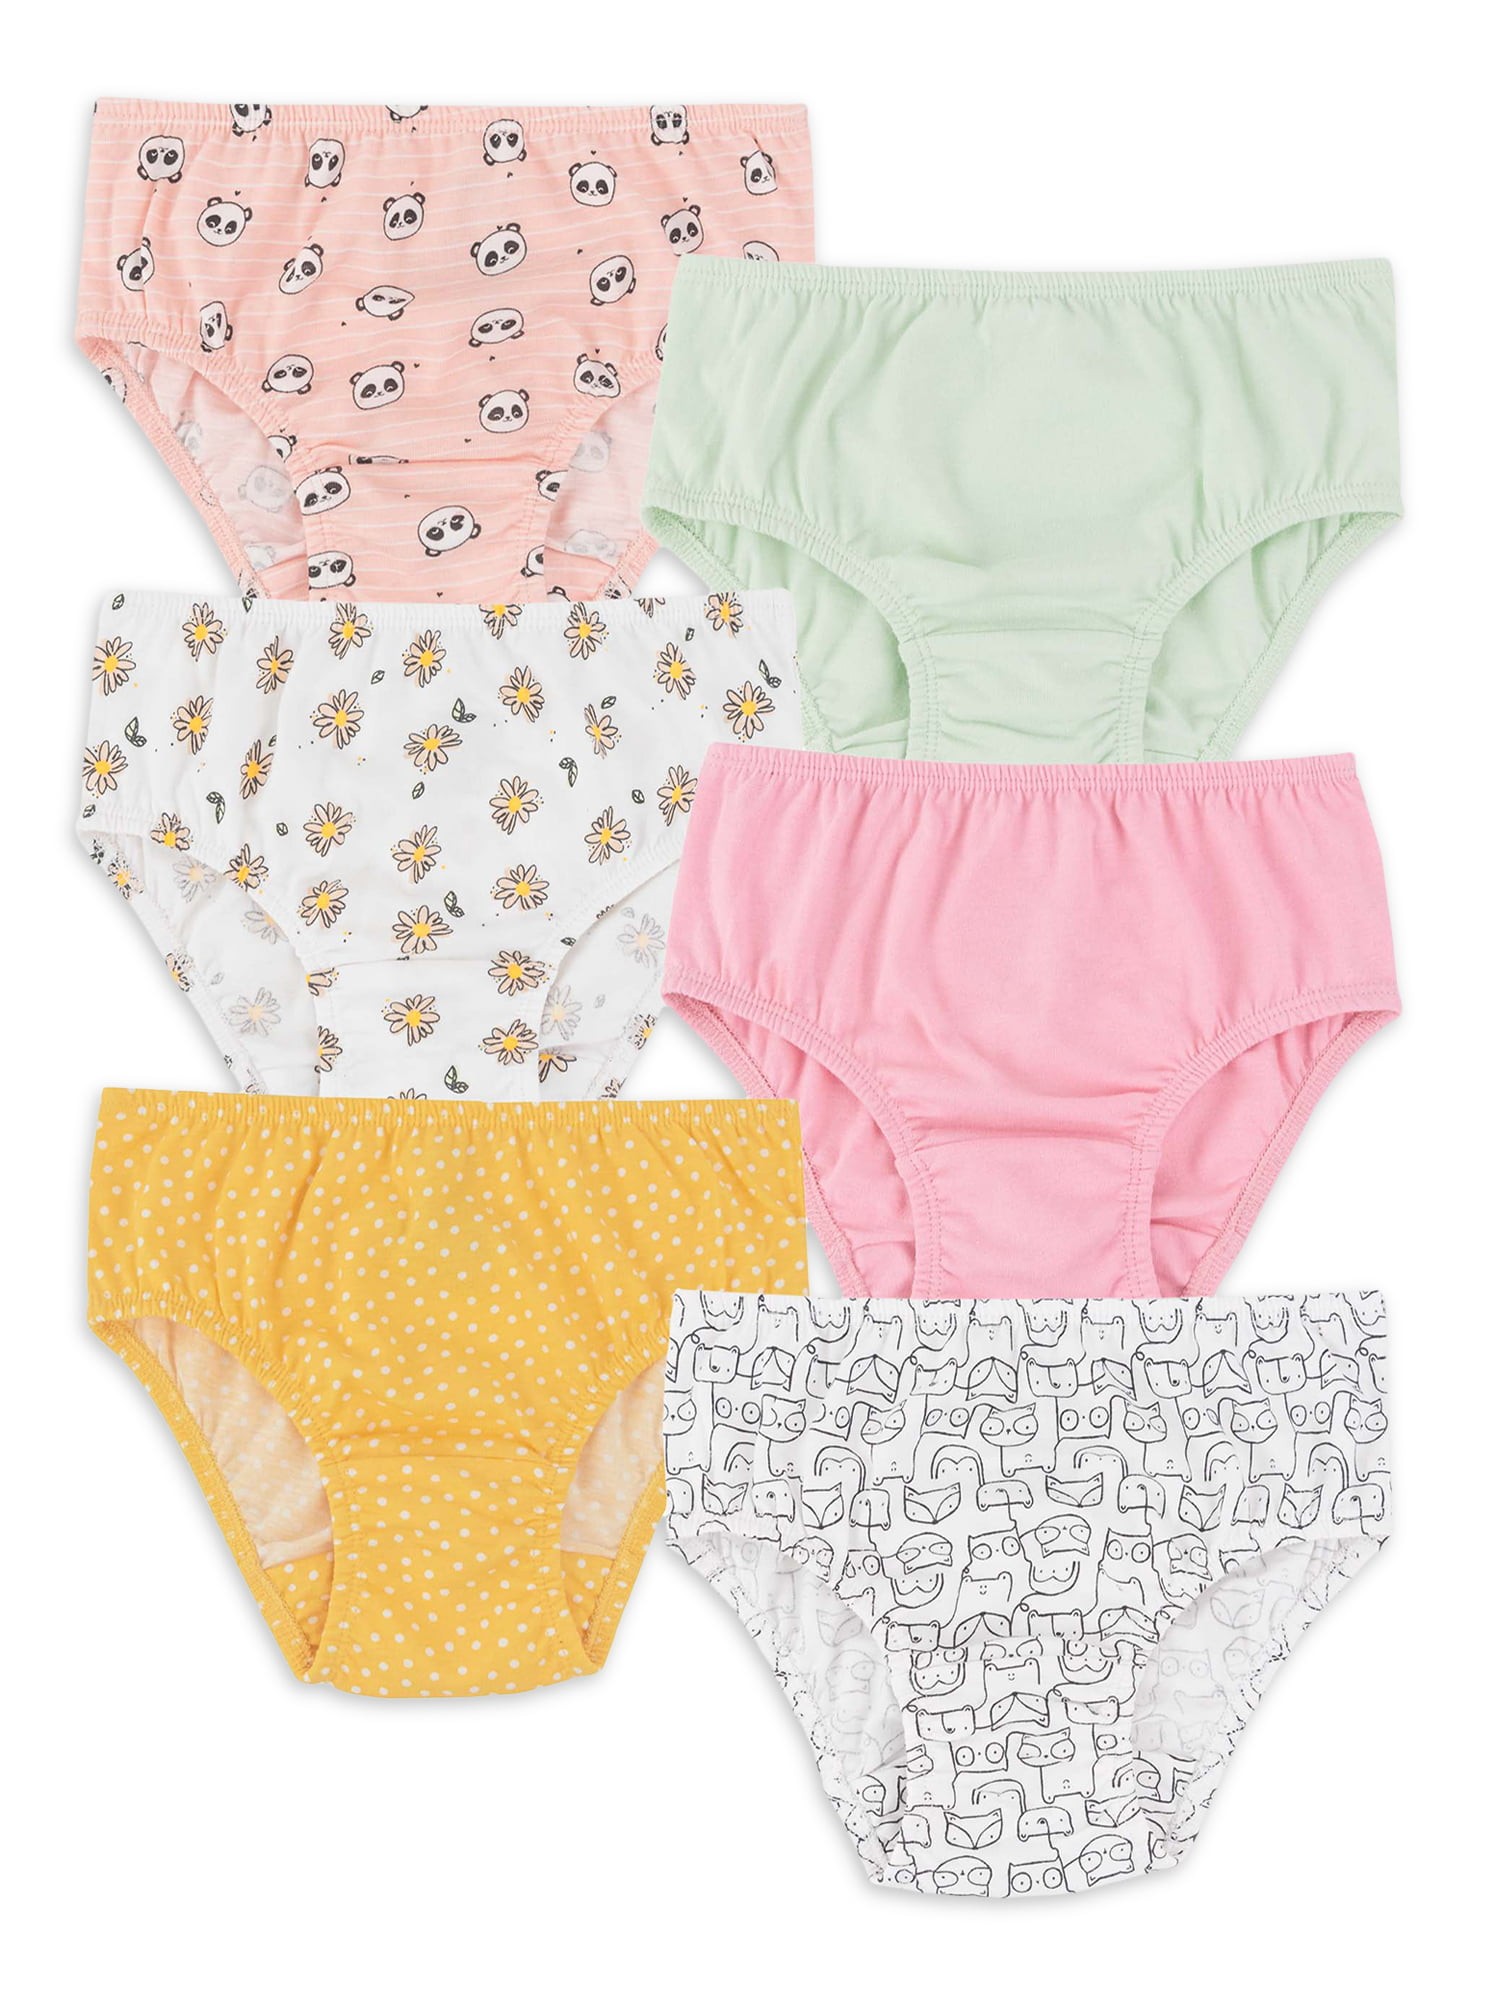 Mejores ofertas e historial de precios de Wonder Nation Toddler Girls Brief  Underwear, 6-Pack, Sizes 2T-5T en